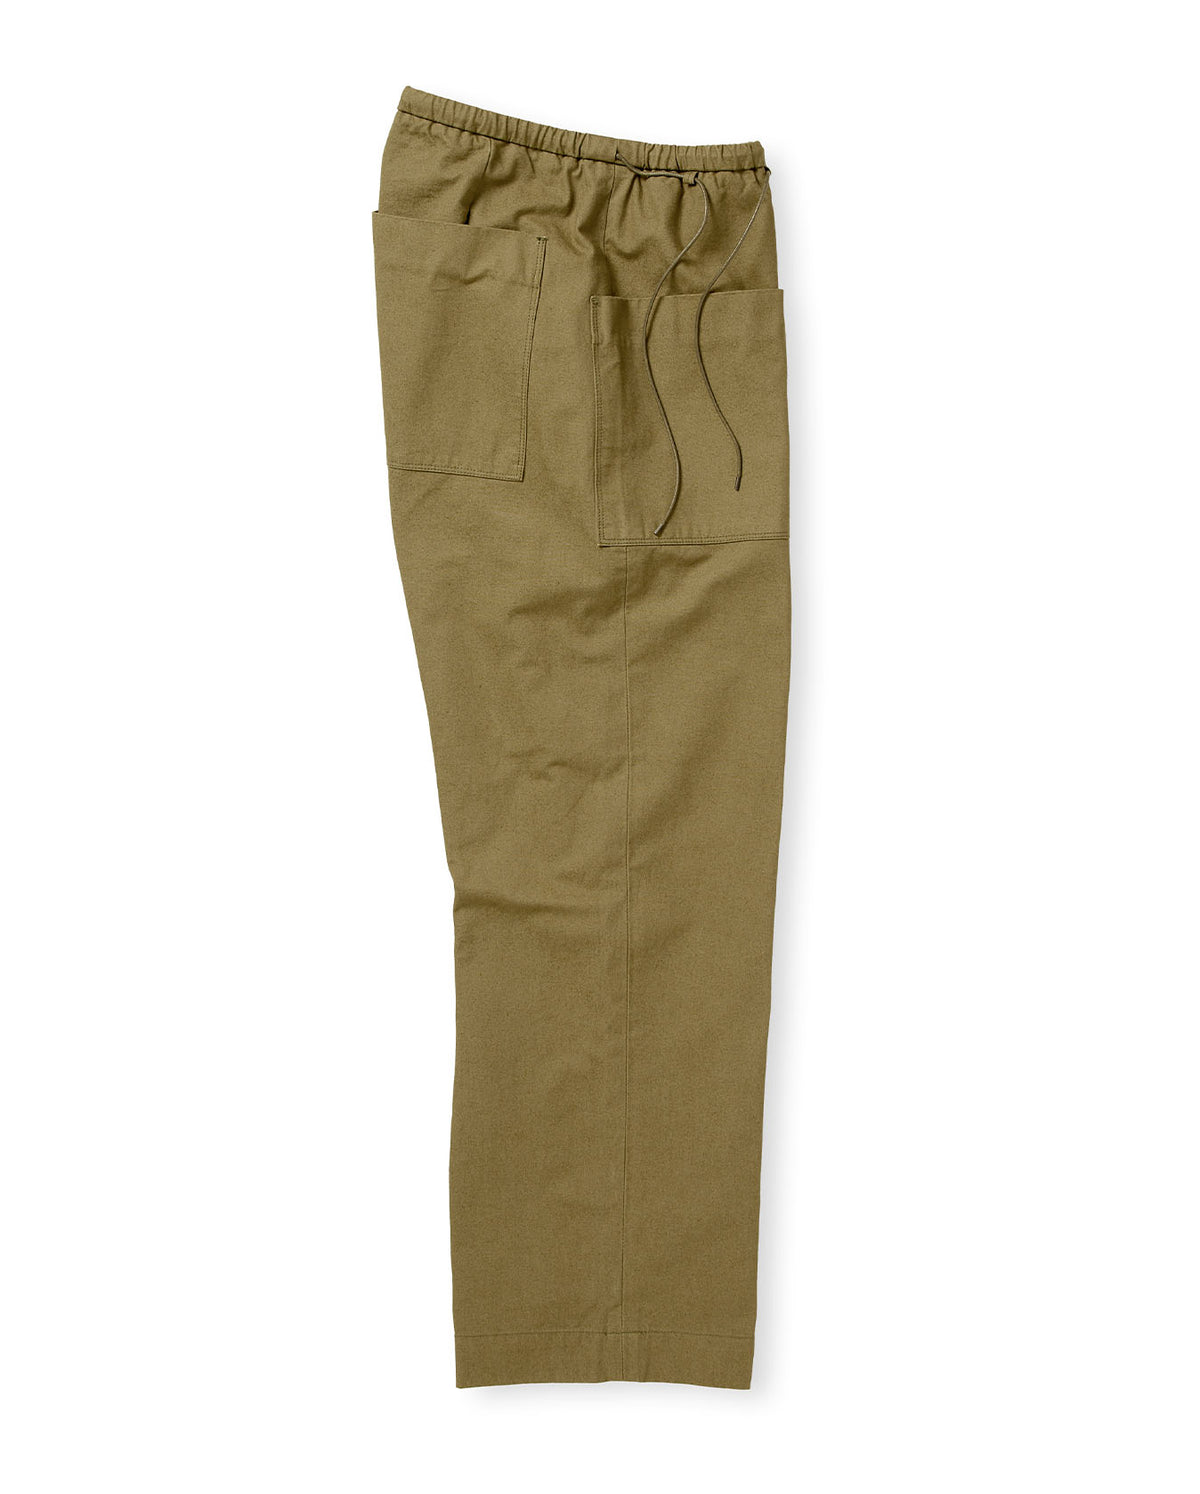 Japanese US Army Fatigue Pants - Military Green